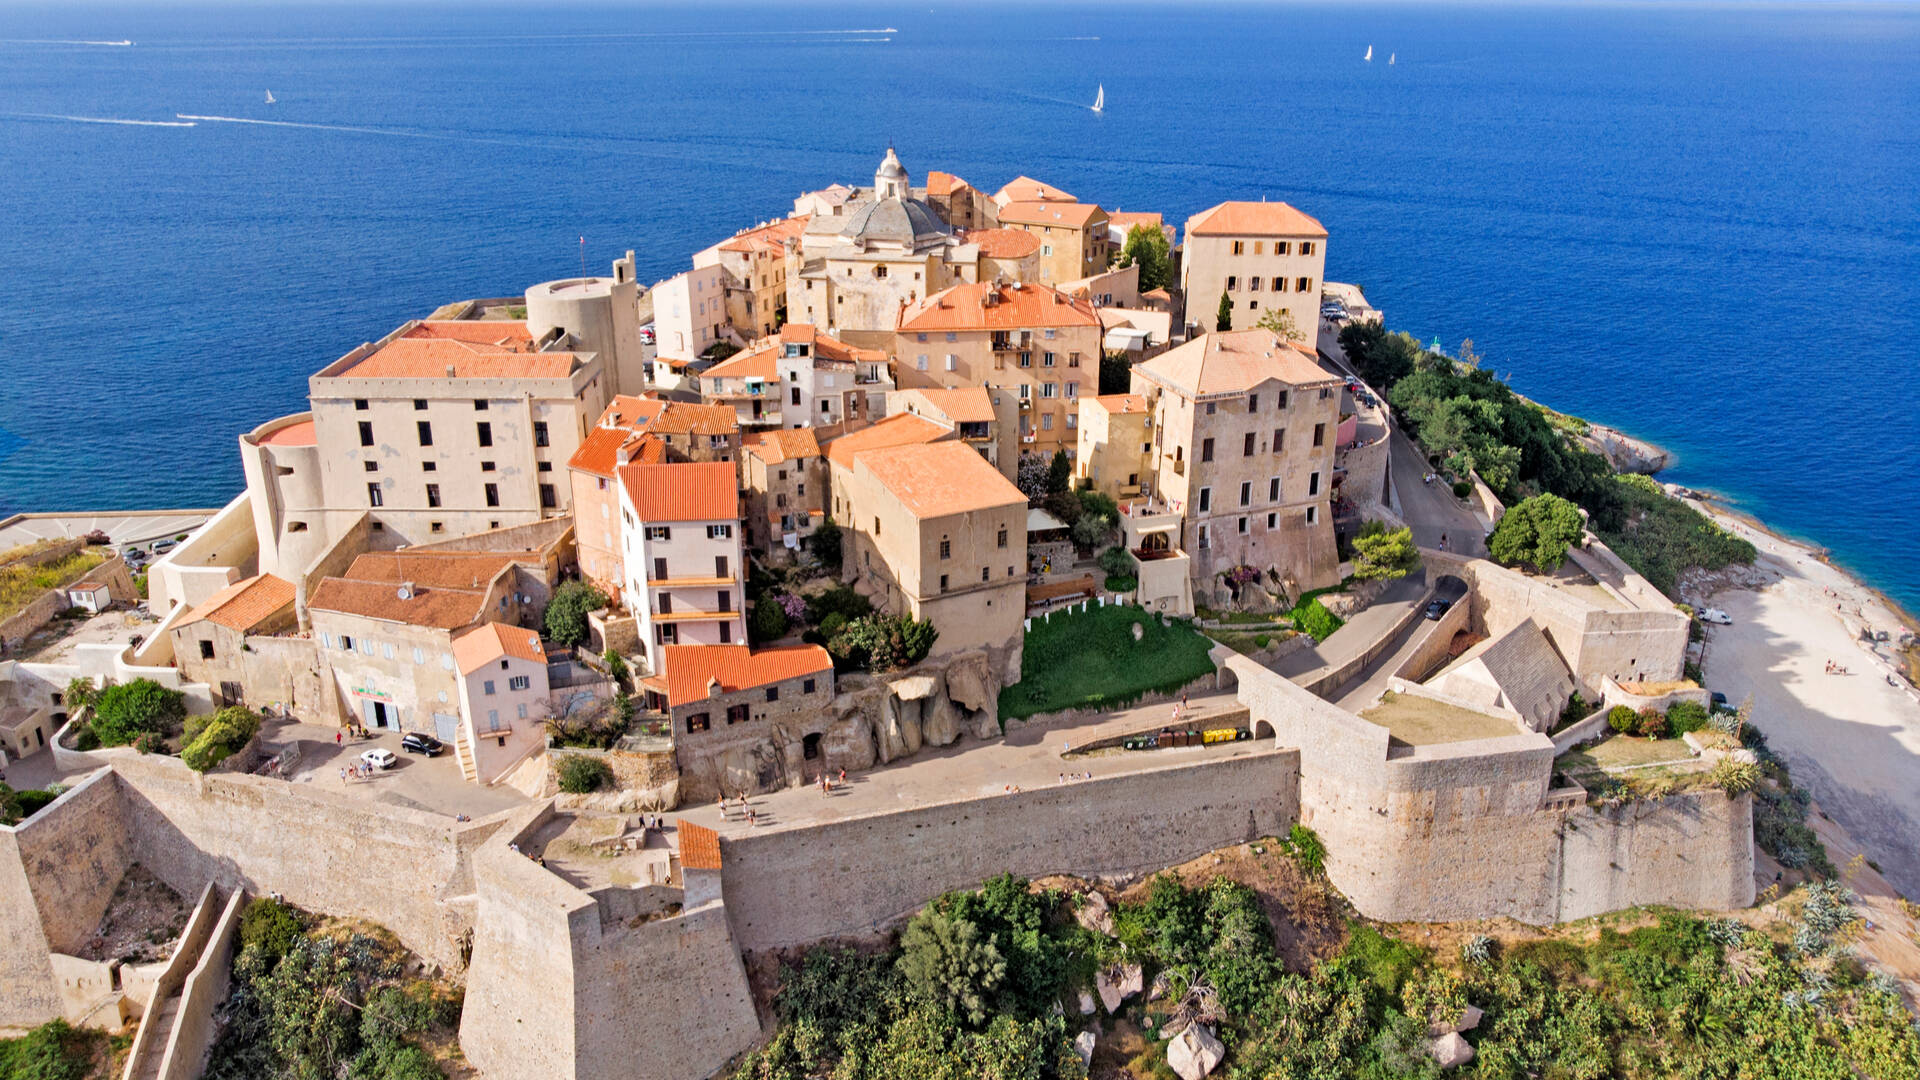 Calvi Reisen und Billigflug - Korsika - Hotels und Flug nach Calvi